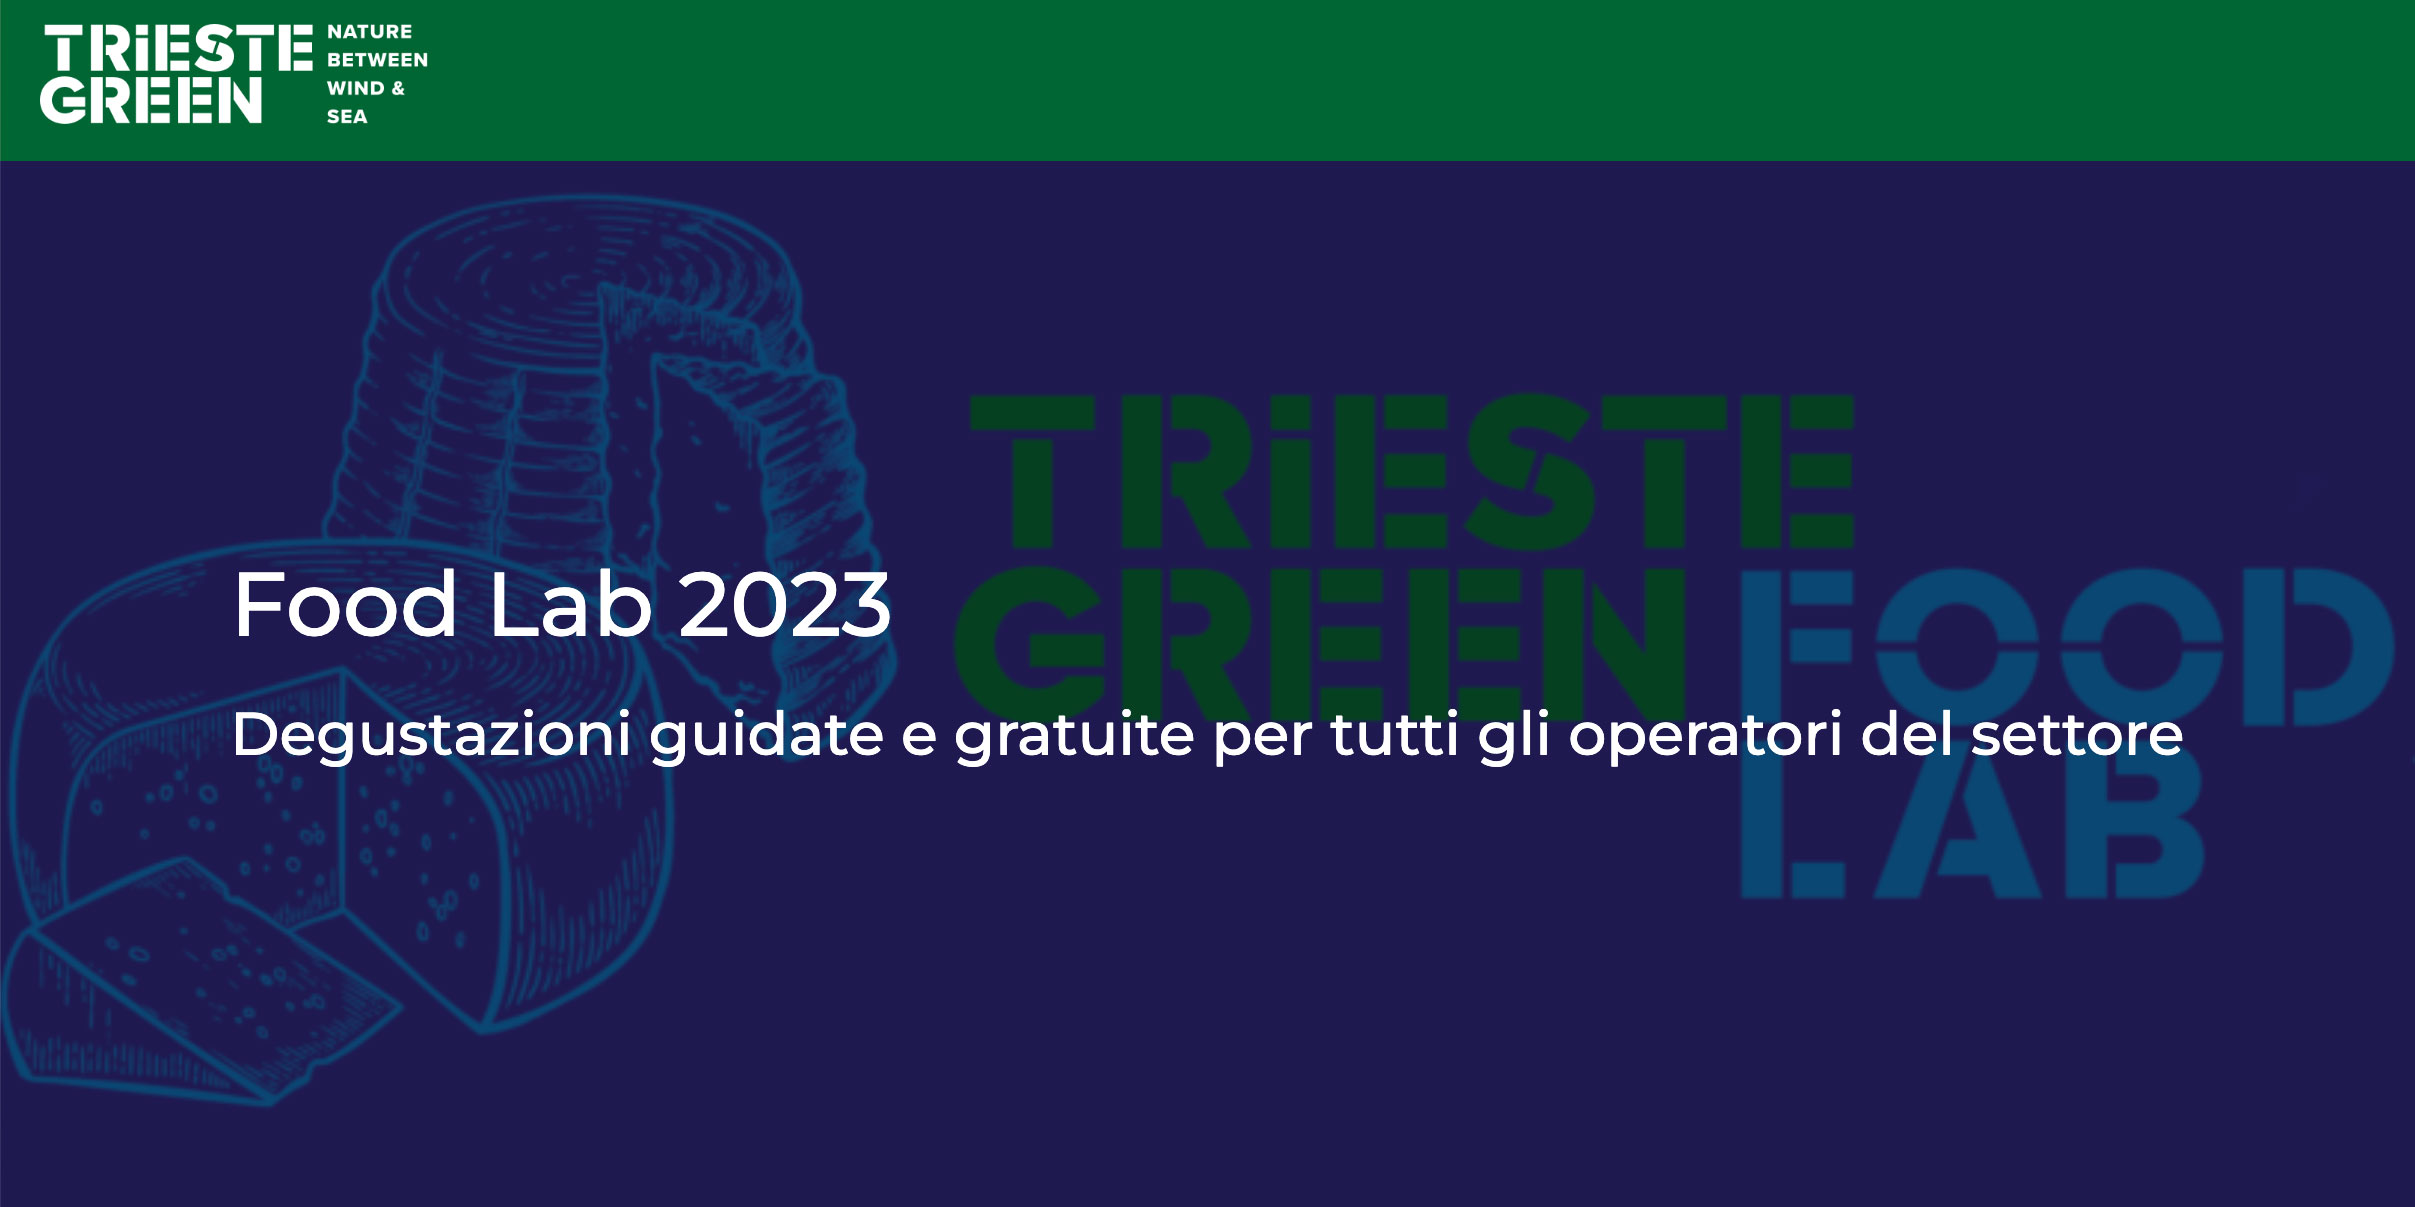 Trieste Green Food Lab 2023